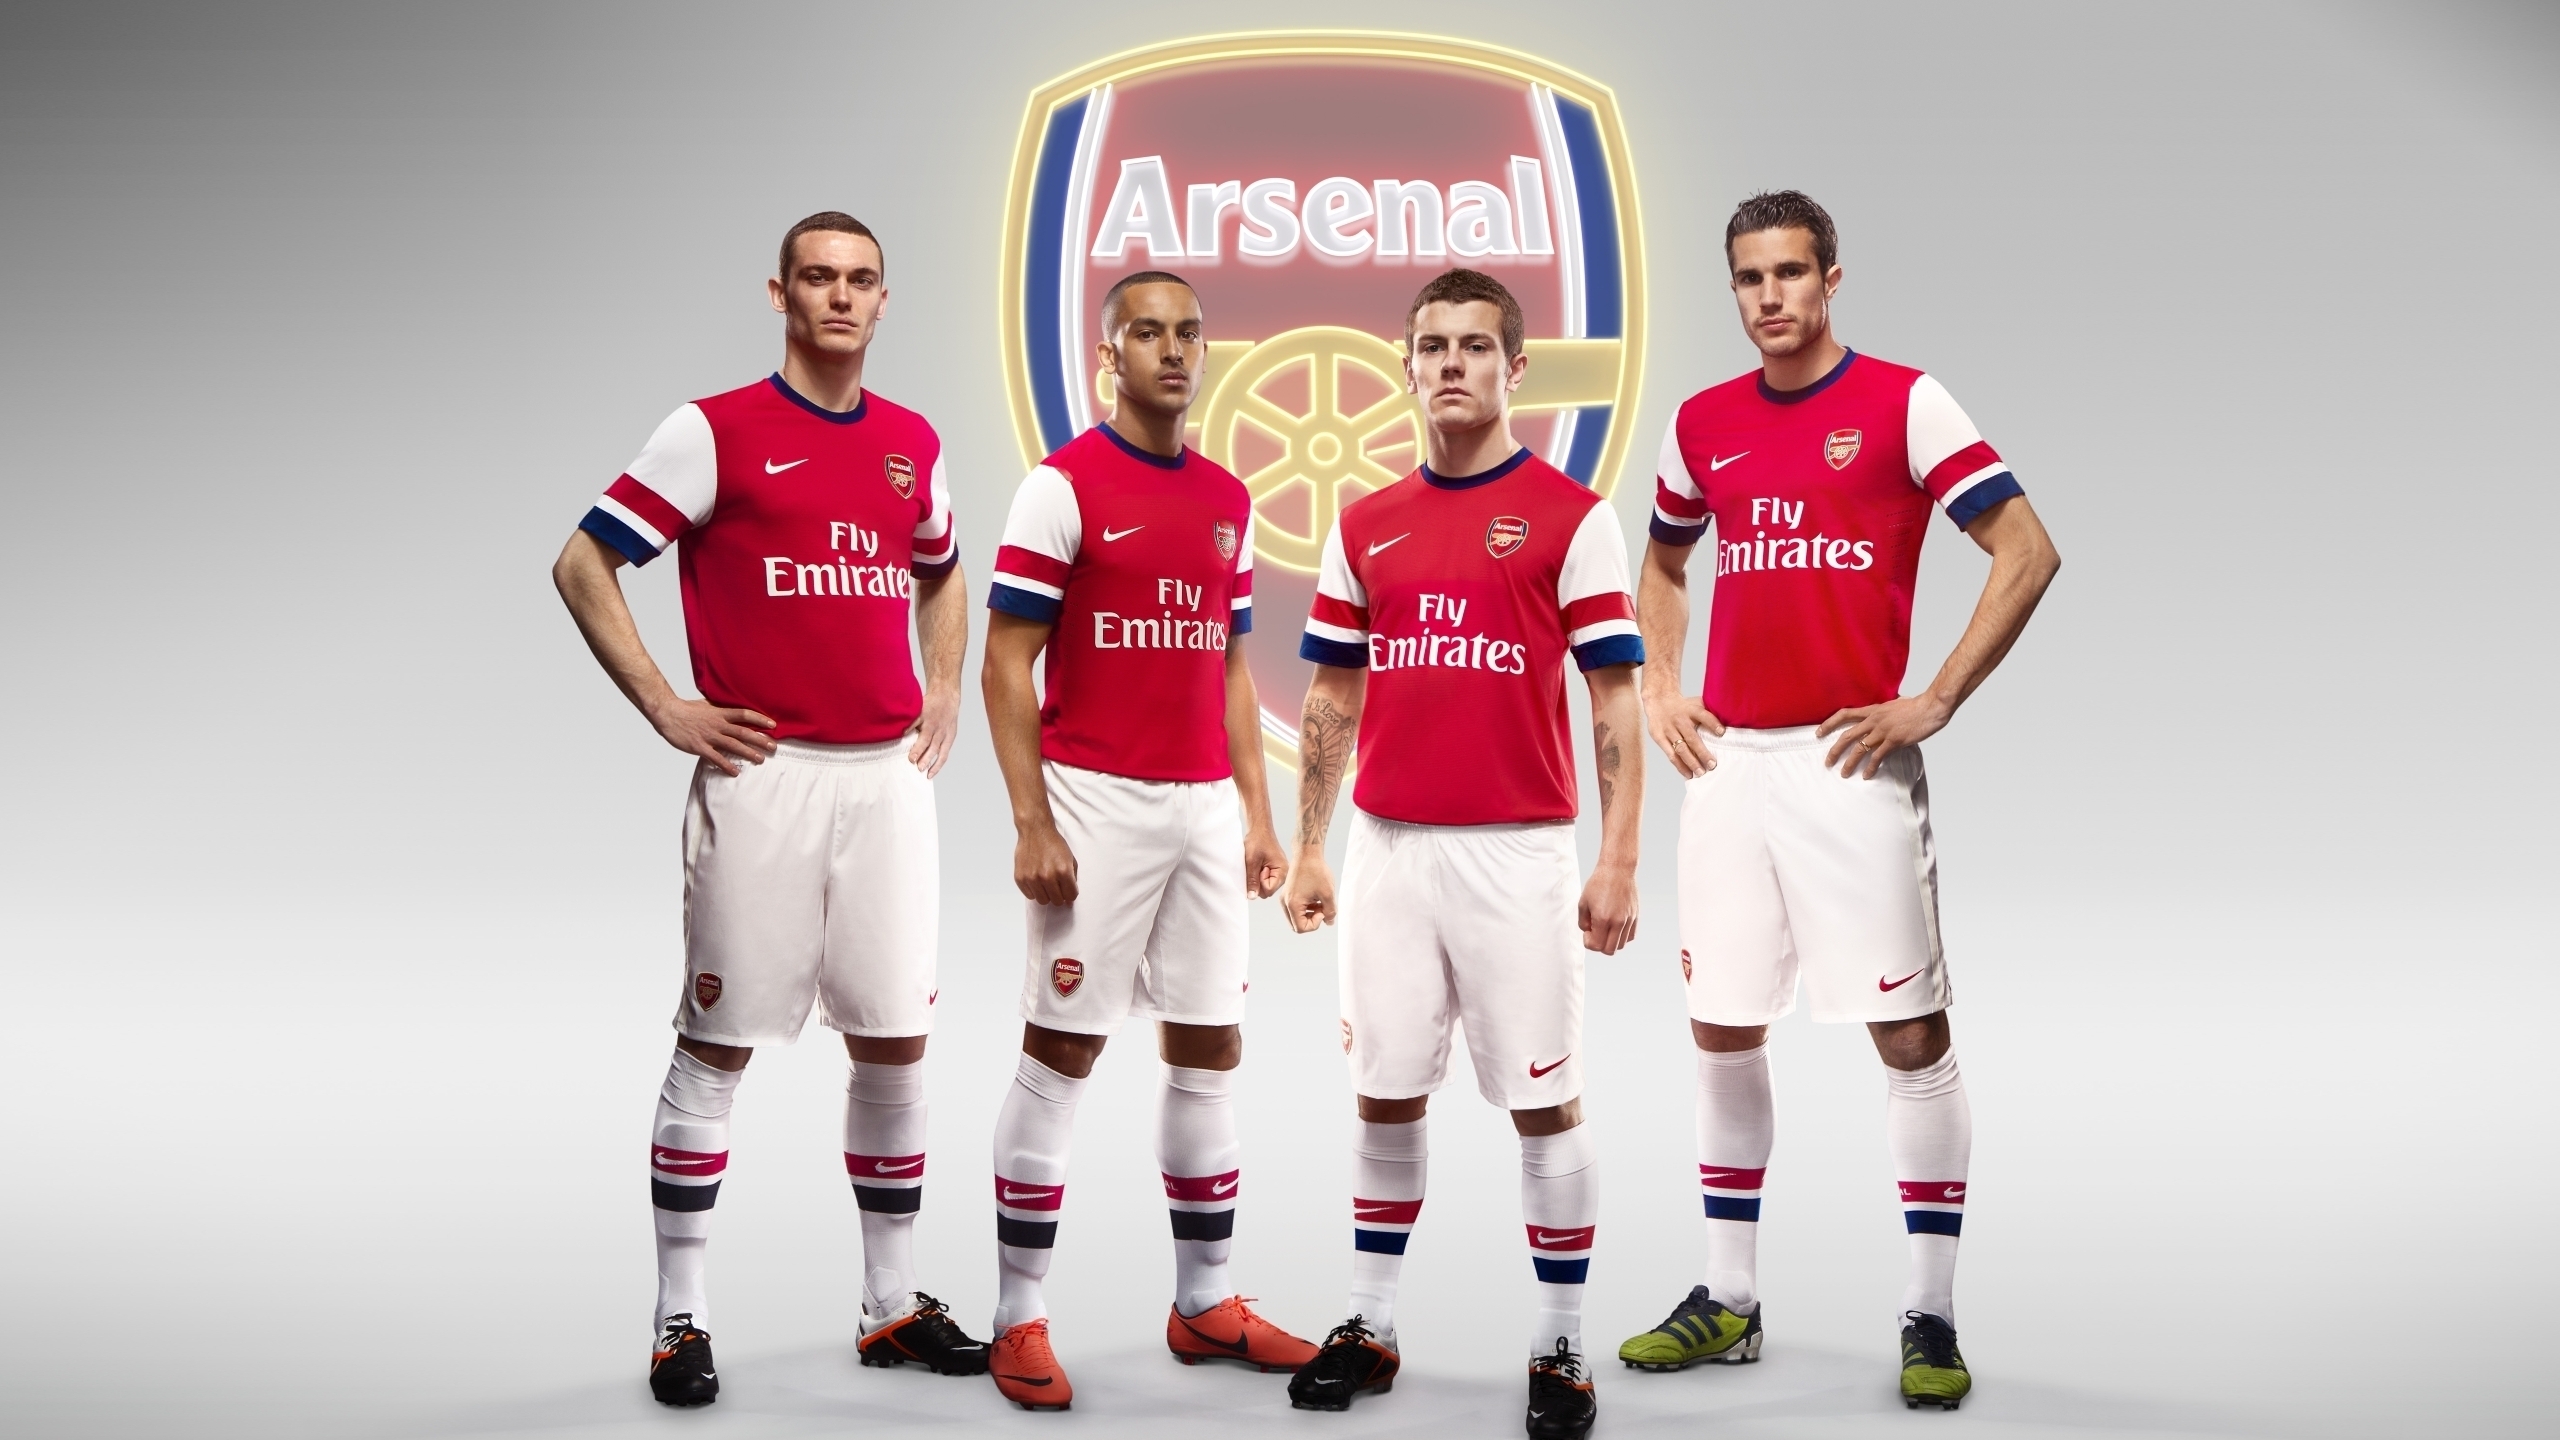 Arsenal Football Club for 2560x1440 HDTV resolution